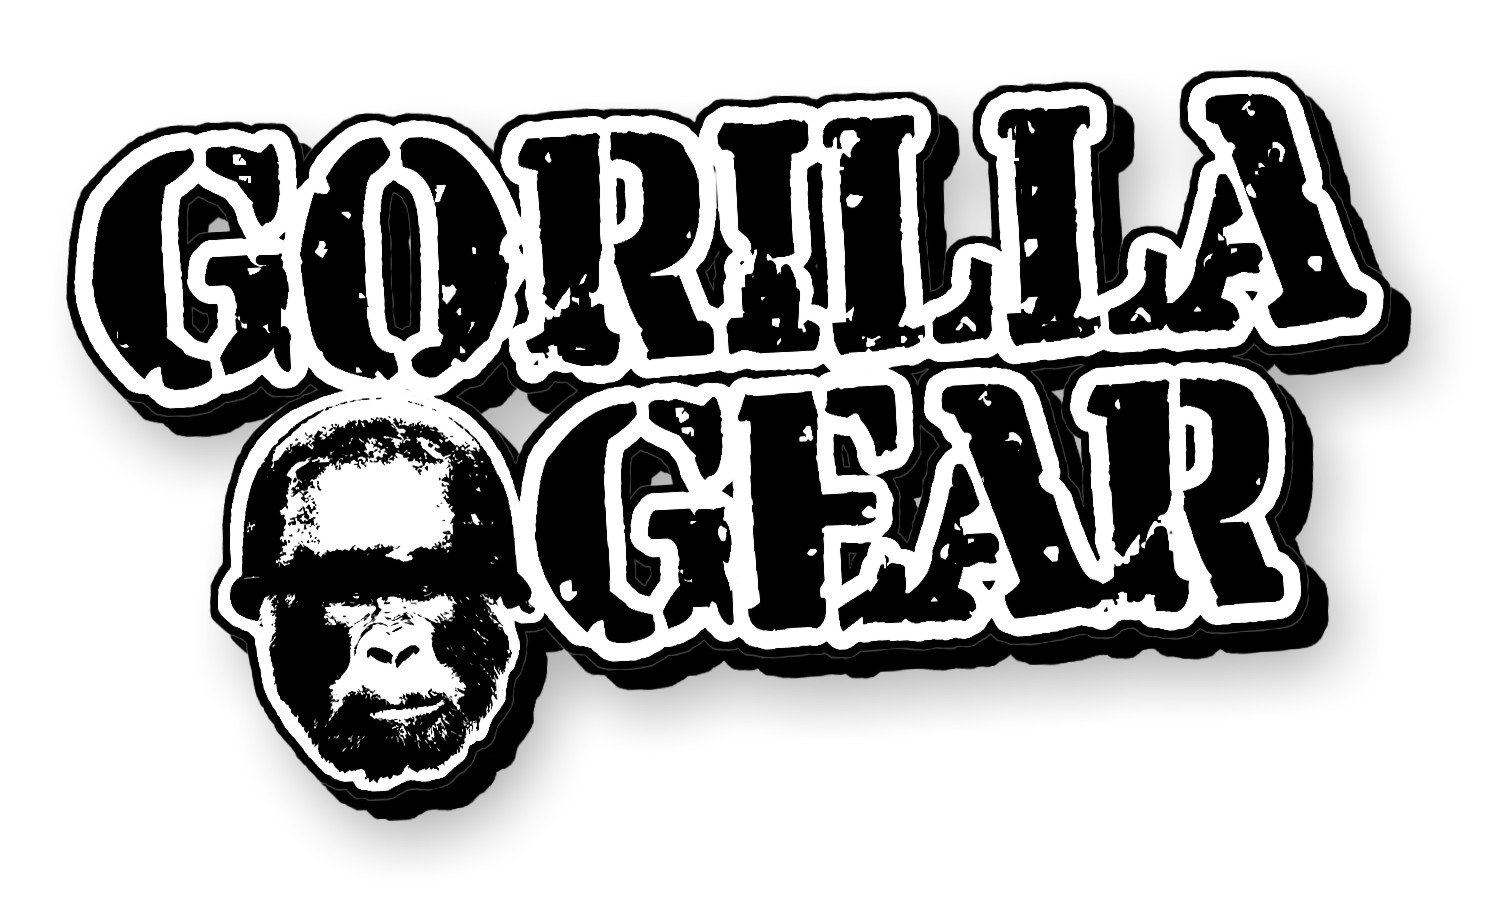 Official Gorilla Army gear